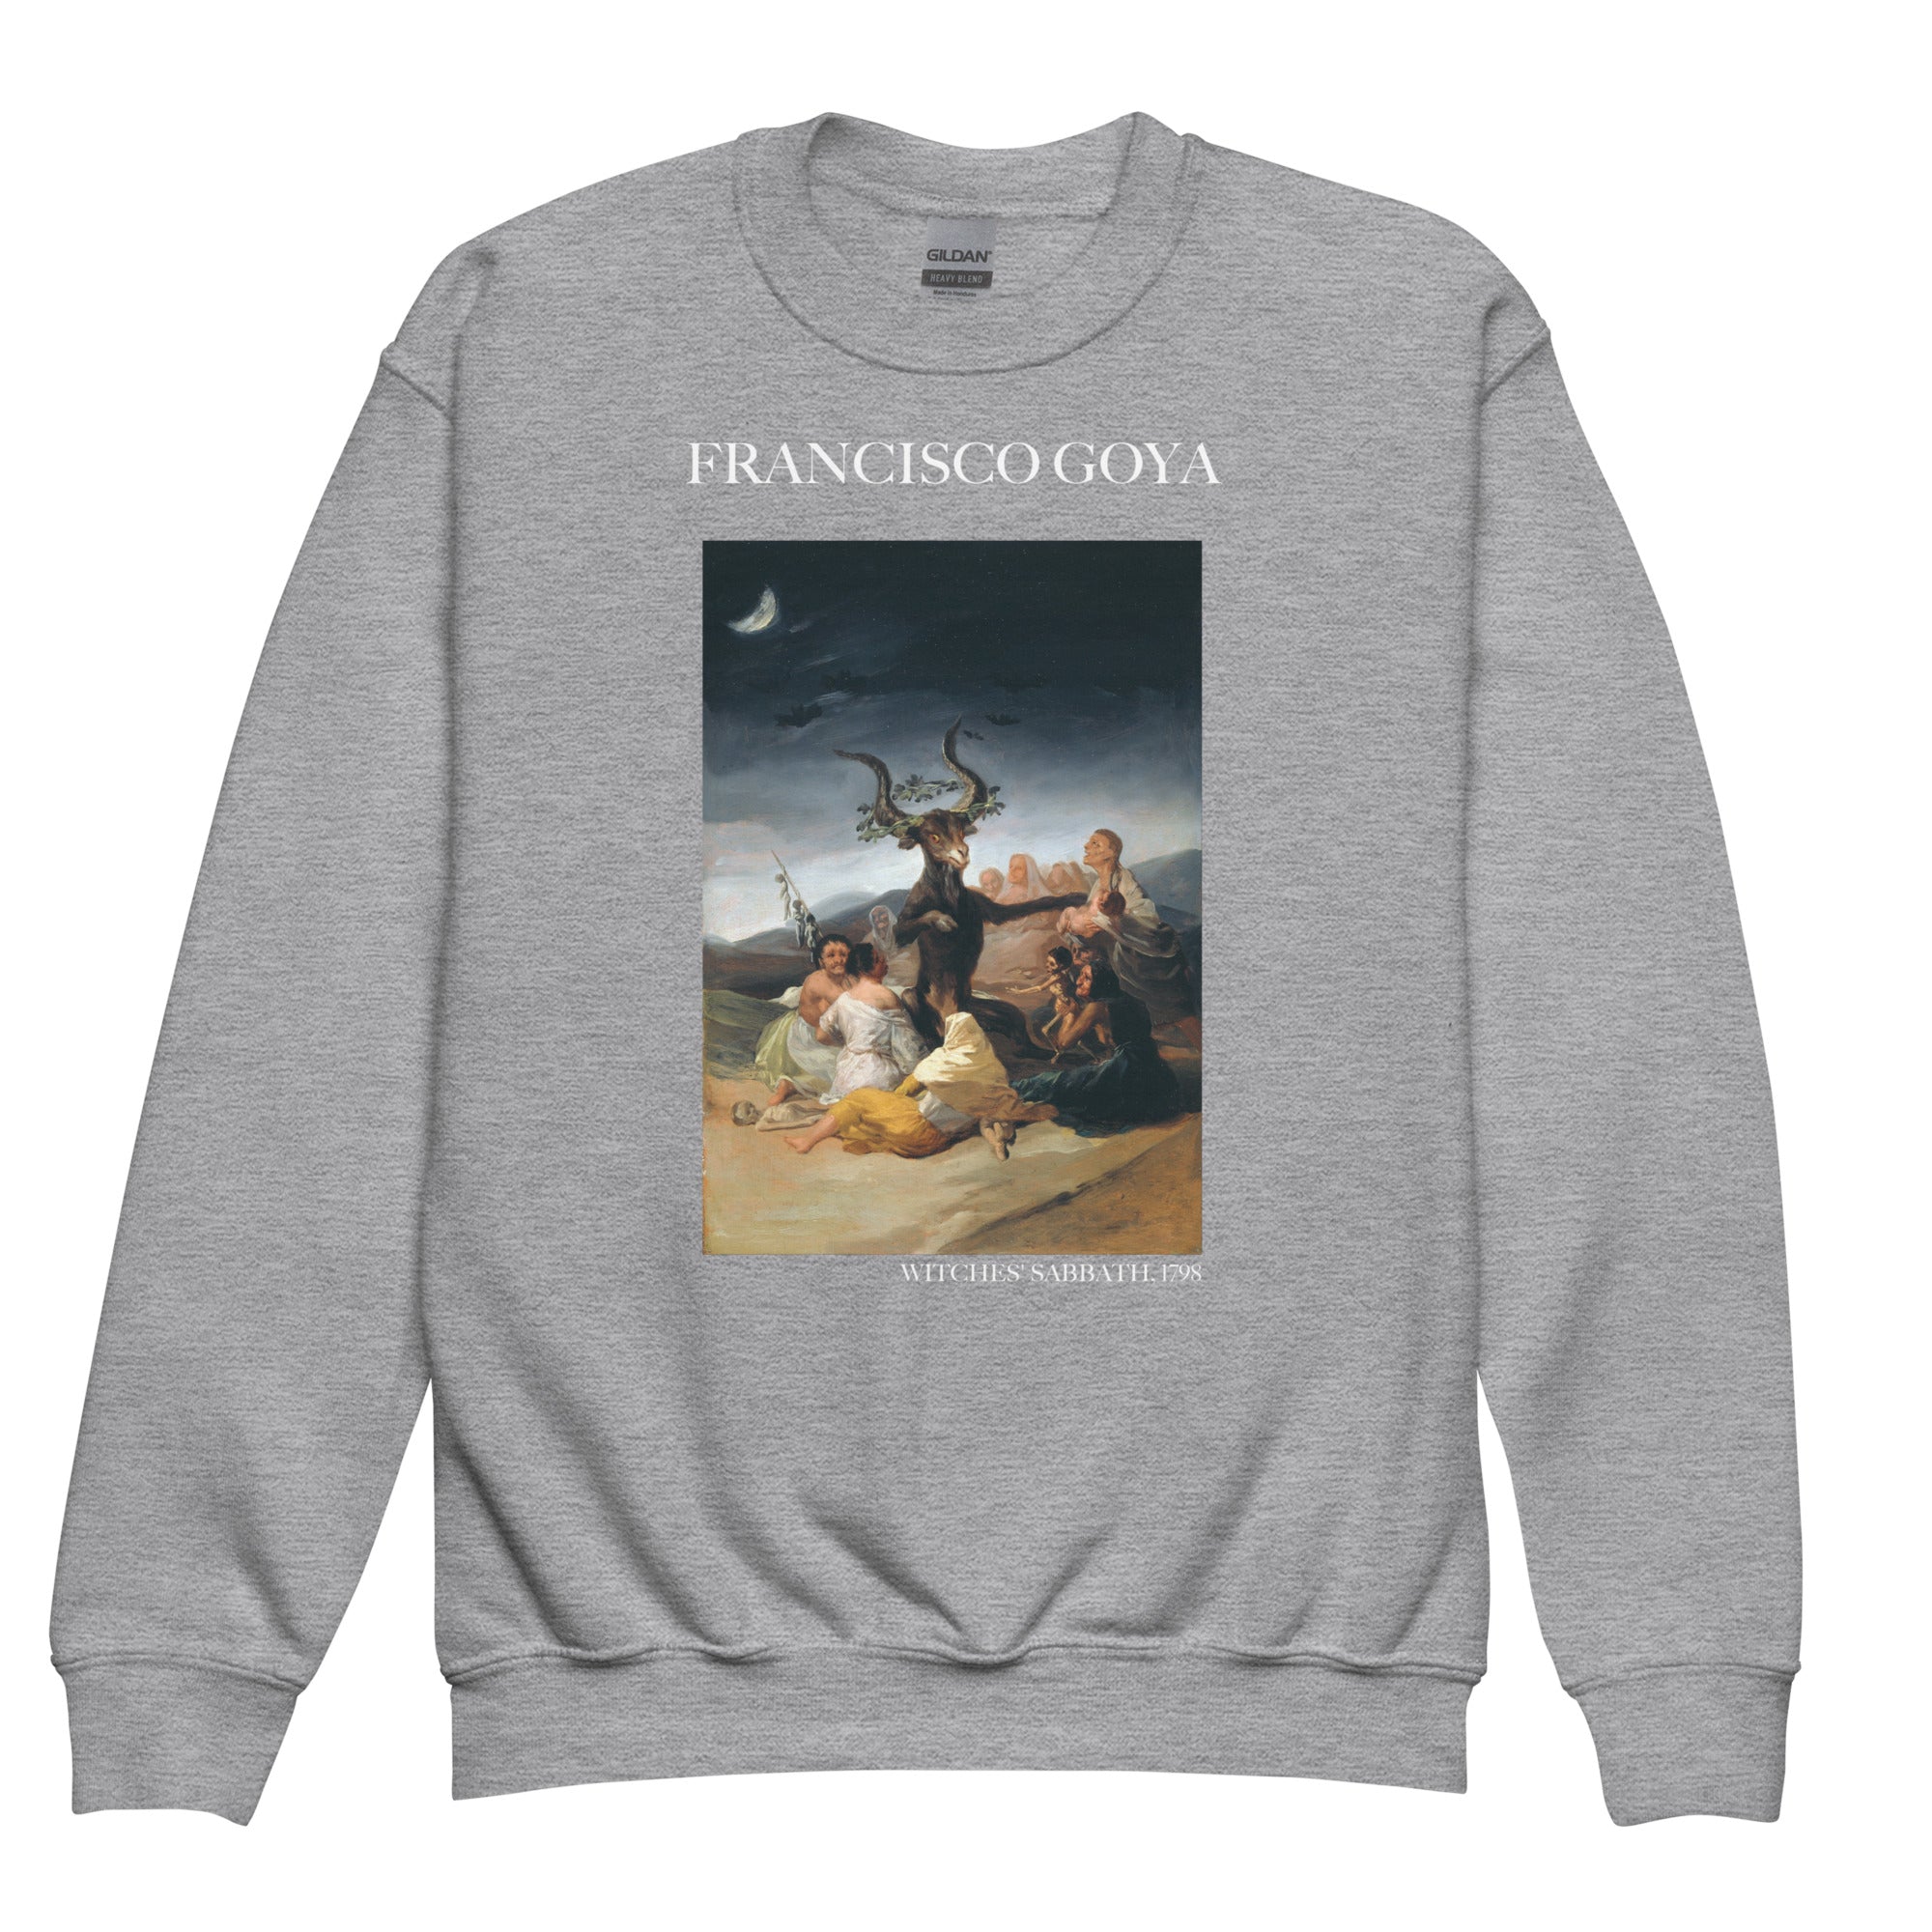 Francisco Goya 'Witches' Sabbath' Famous Painting Crewneck Sweatshirt | Premium Youth Art Sweatshirt